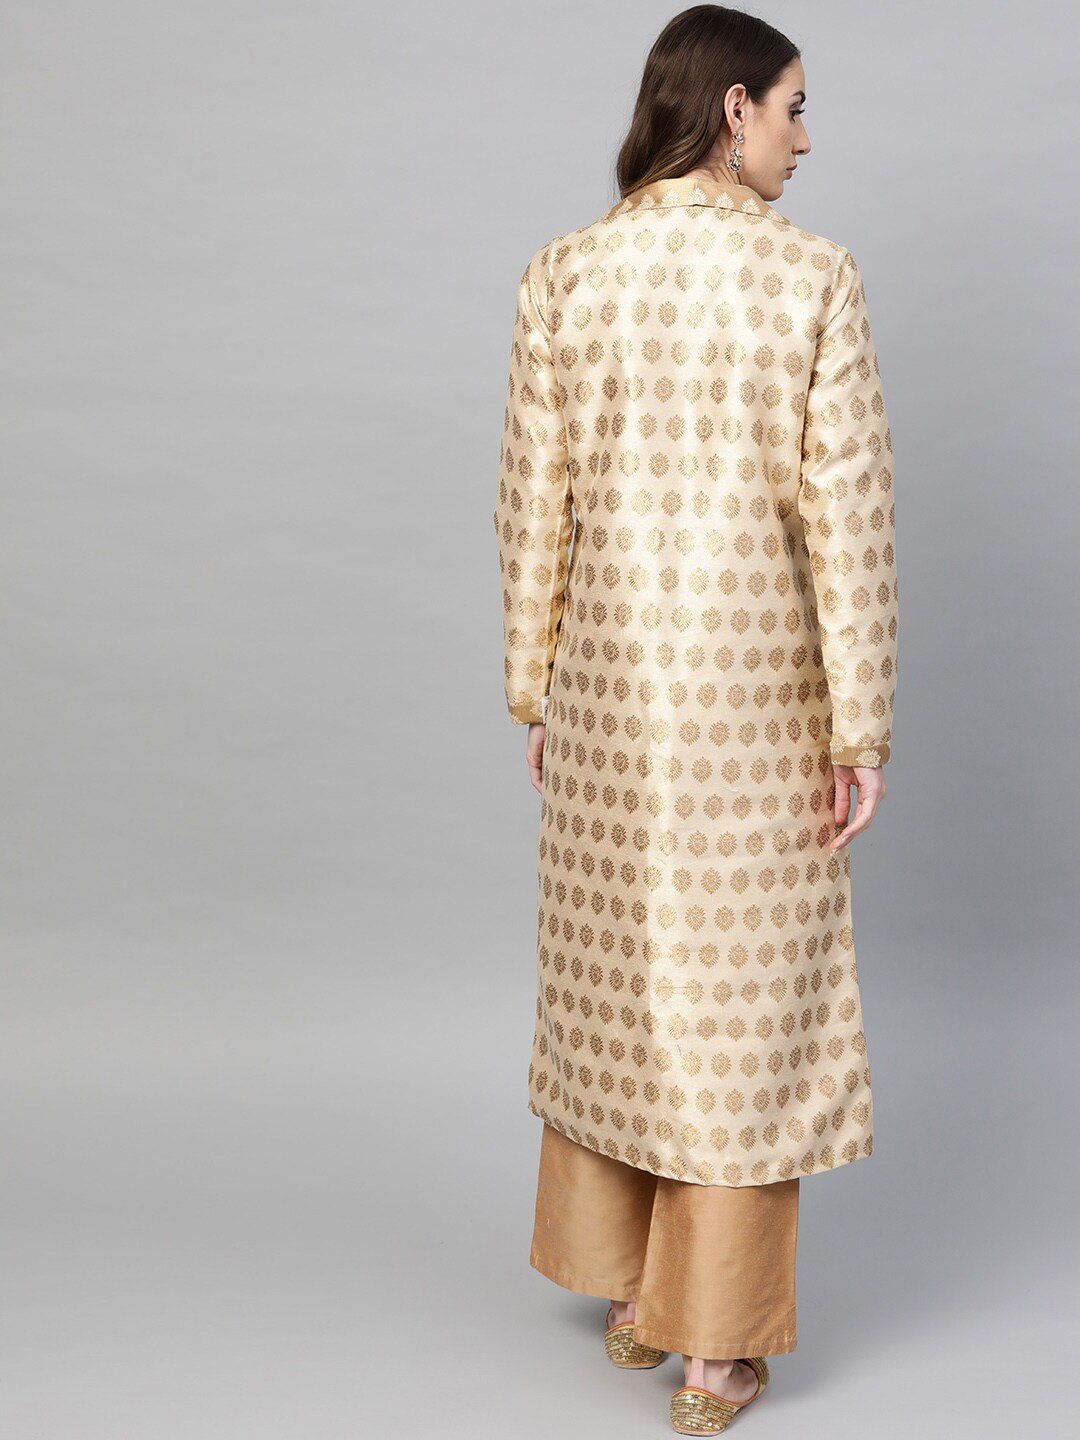 Women's  Off-White & Golden Woven Design Brocade Reversible Longline Open Front Ethnic Jacket - AKS